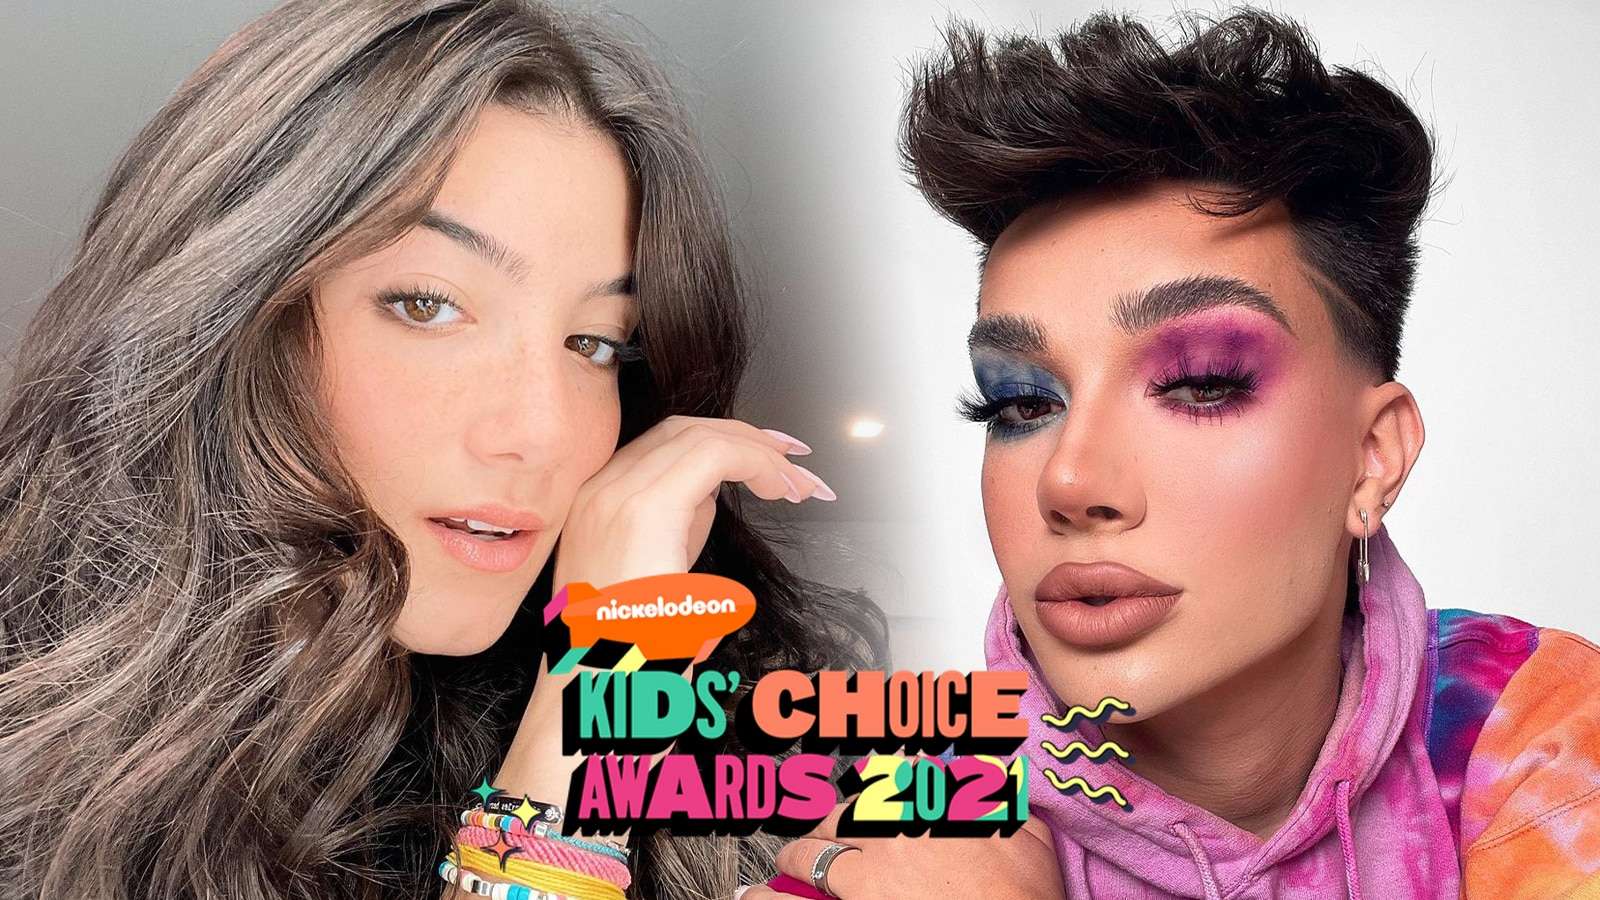 Charli D'Amelio and James Charles winning Kids Choice Awards 2021